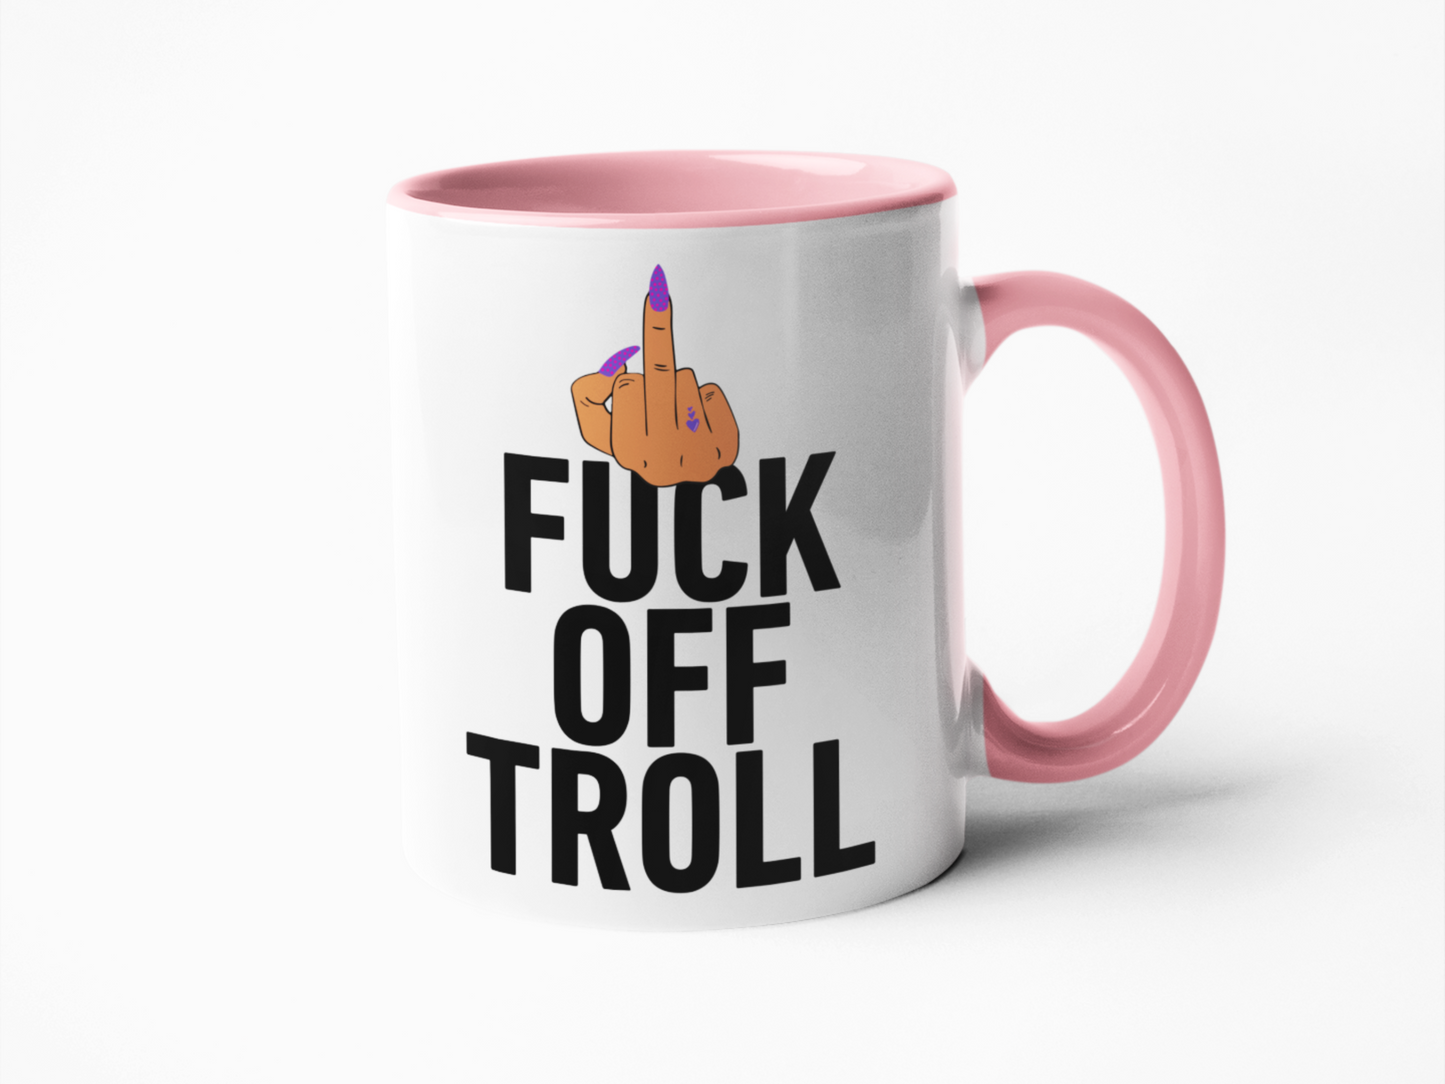 Fuck off troll funny coffee mug